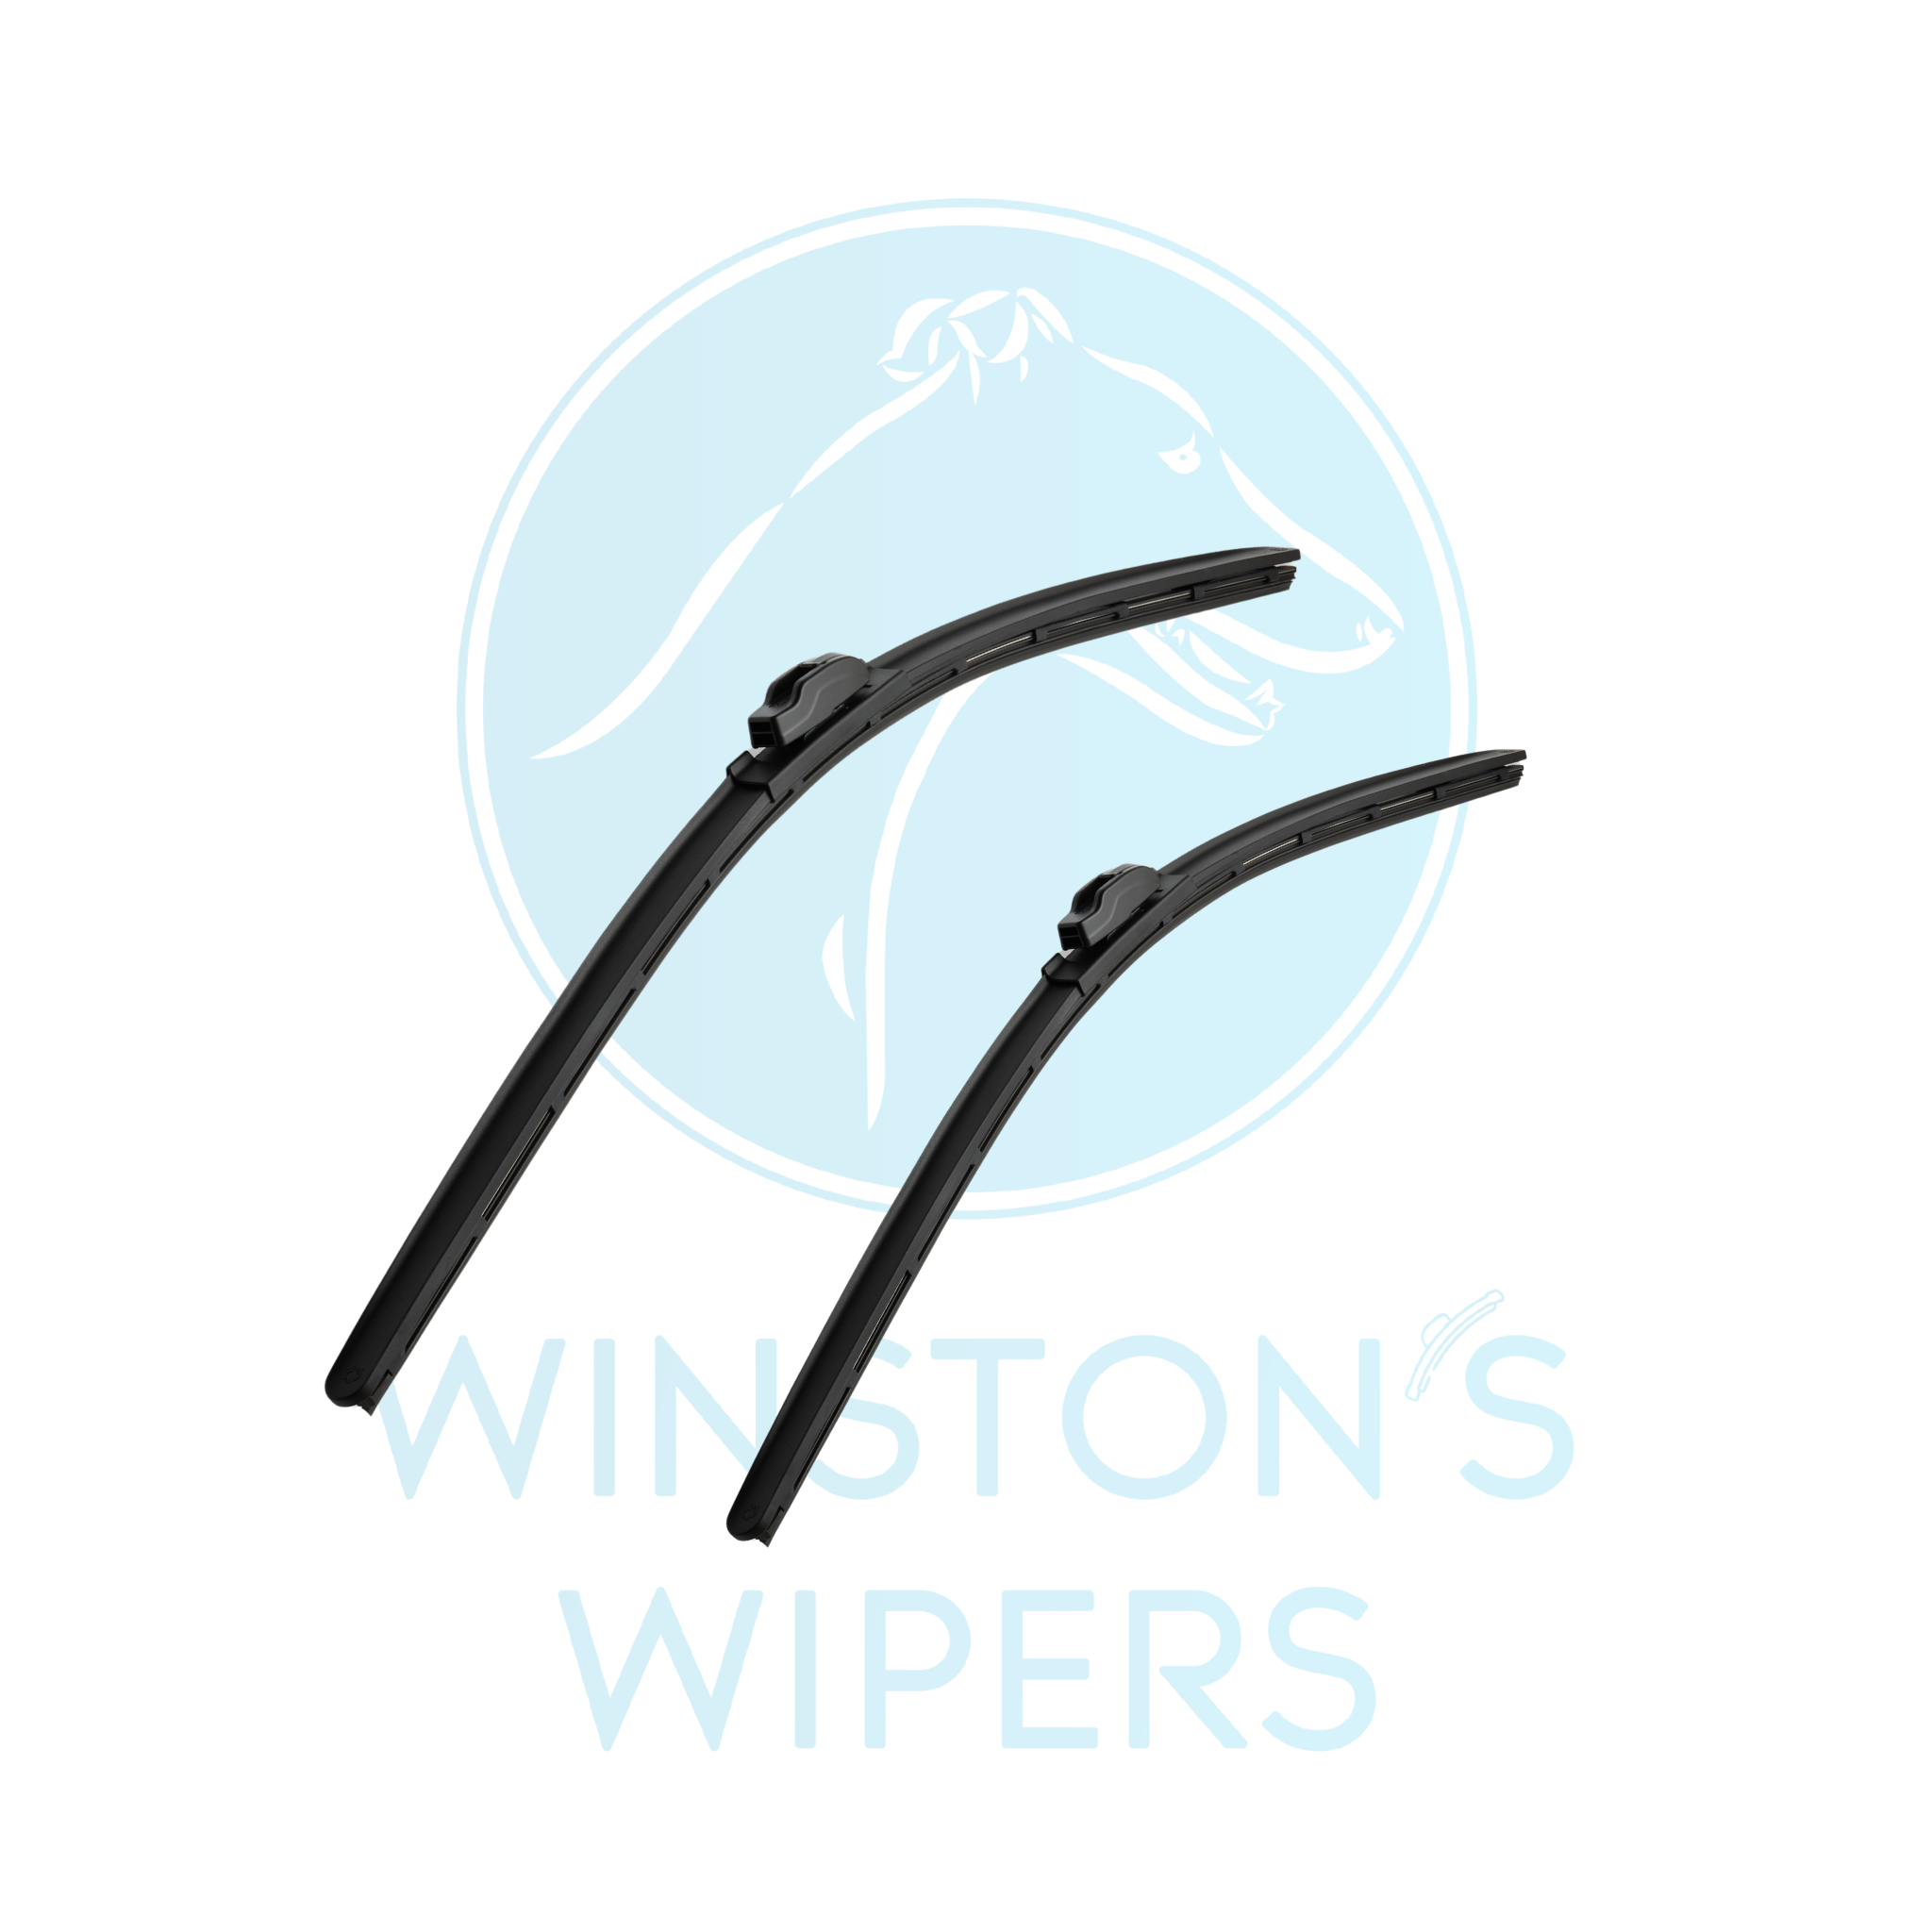 Winston's Aeroblade Wipers To Suit Toyota Landcruiser 100 Series